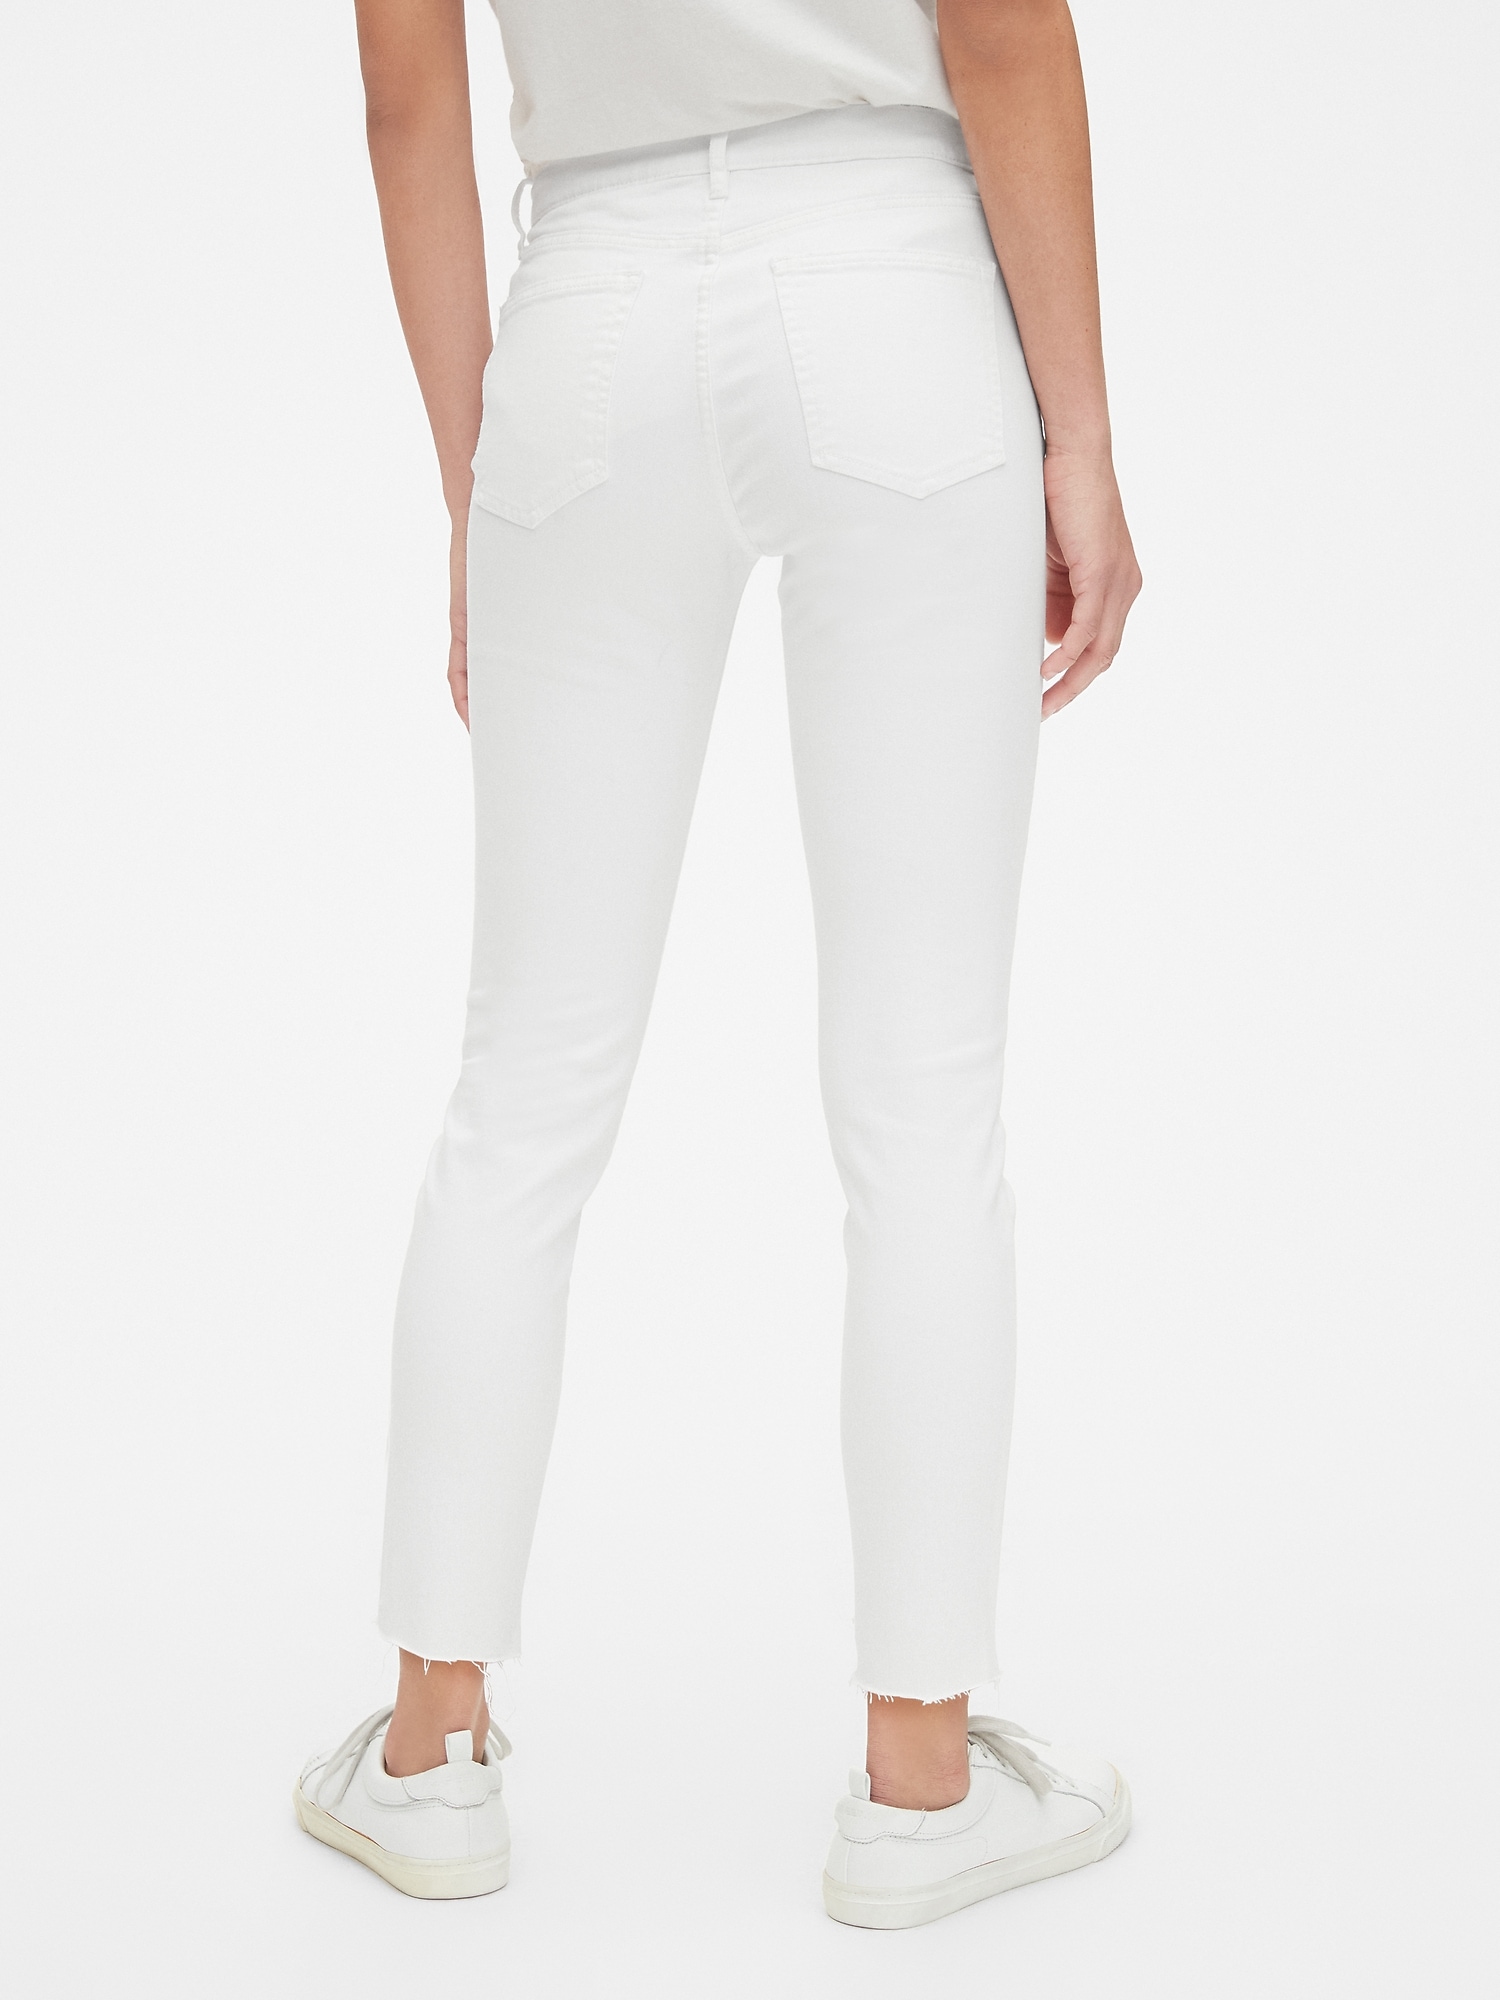 gap white skinny jeans